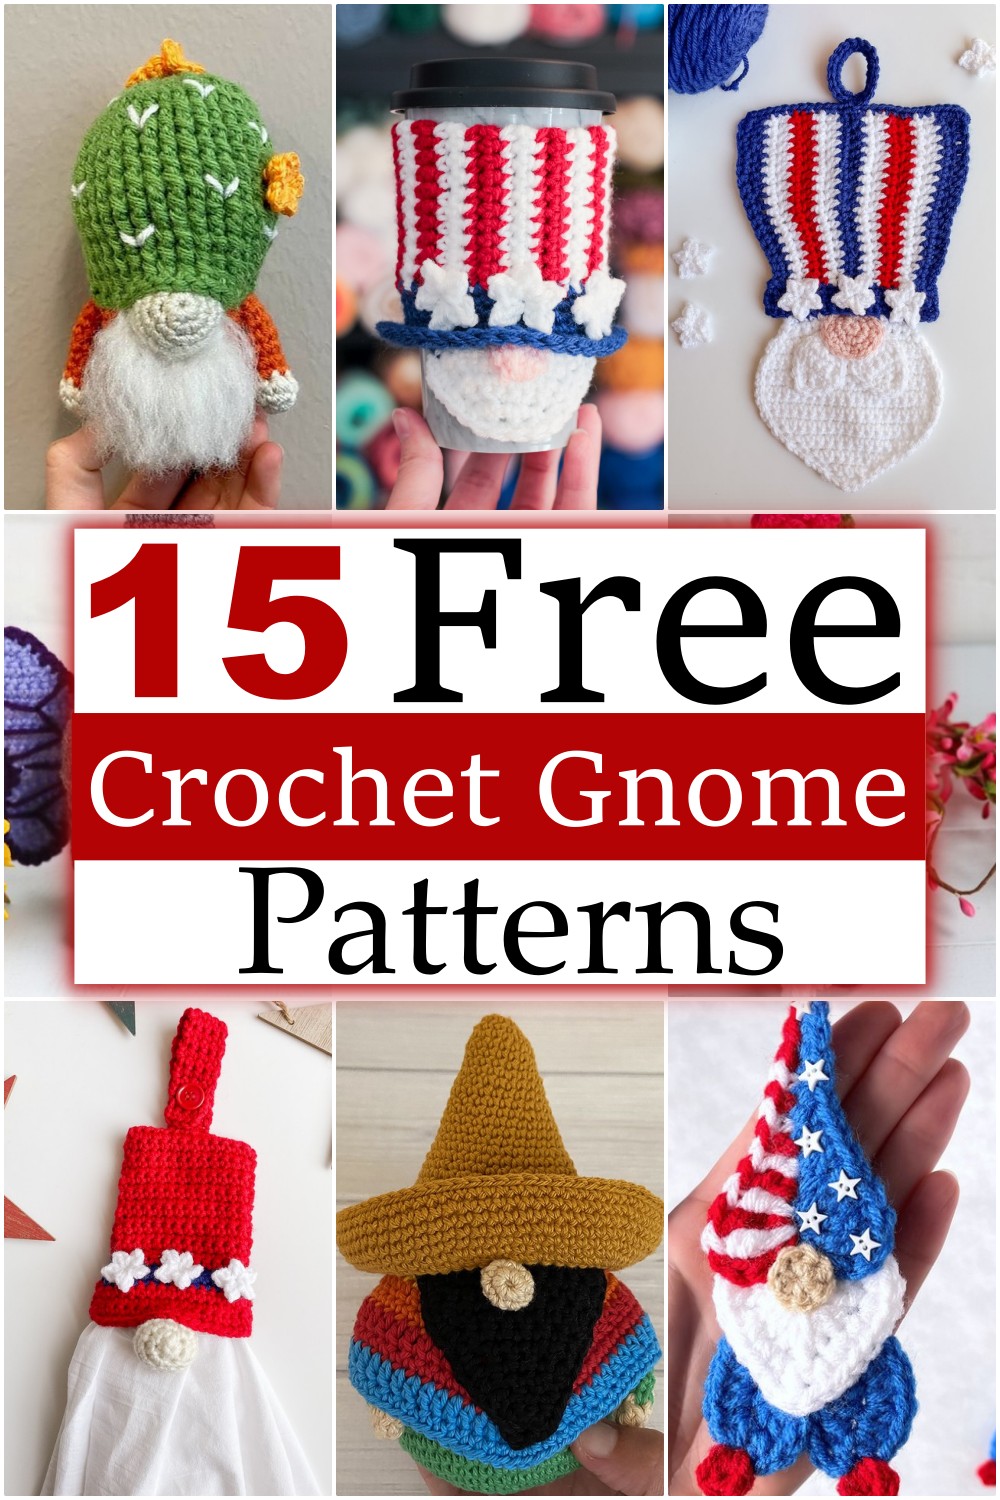 Crochet Gnome Patterns